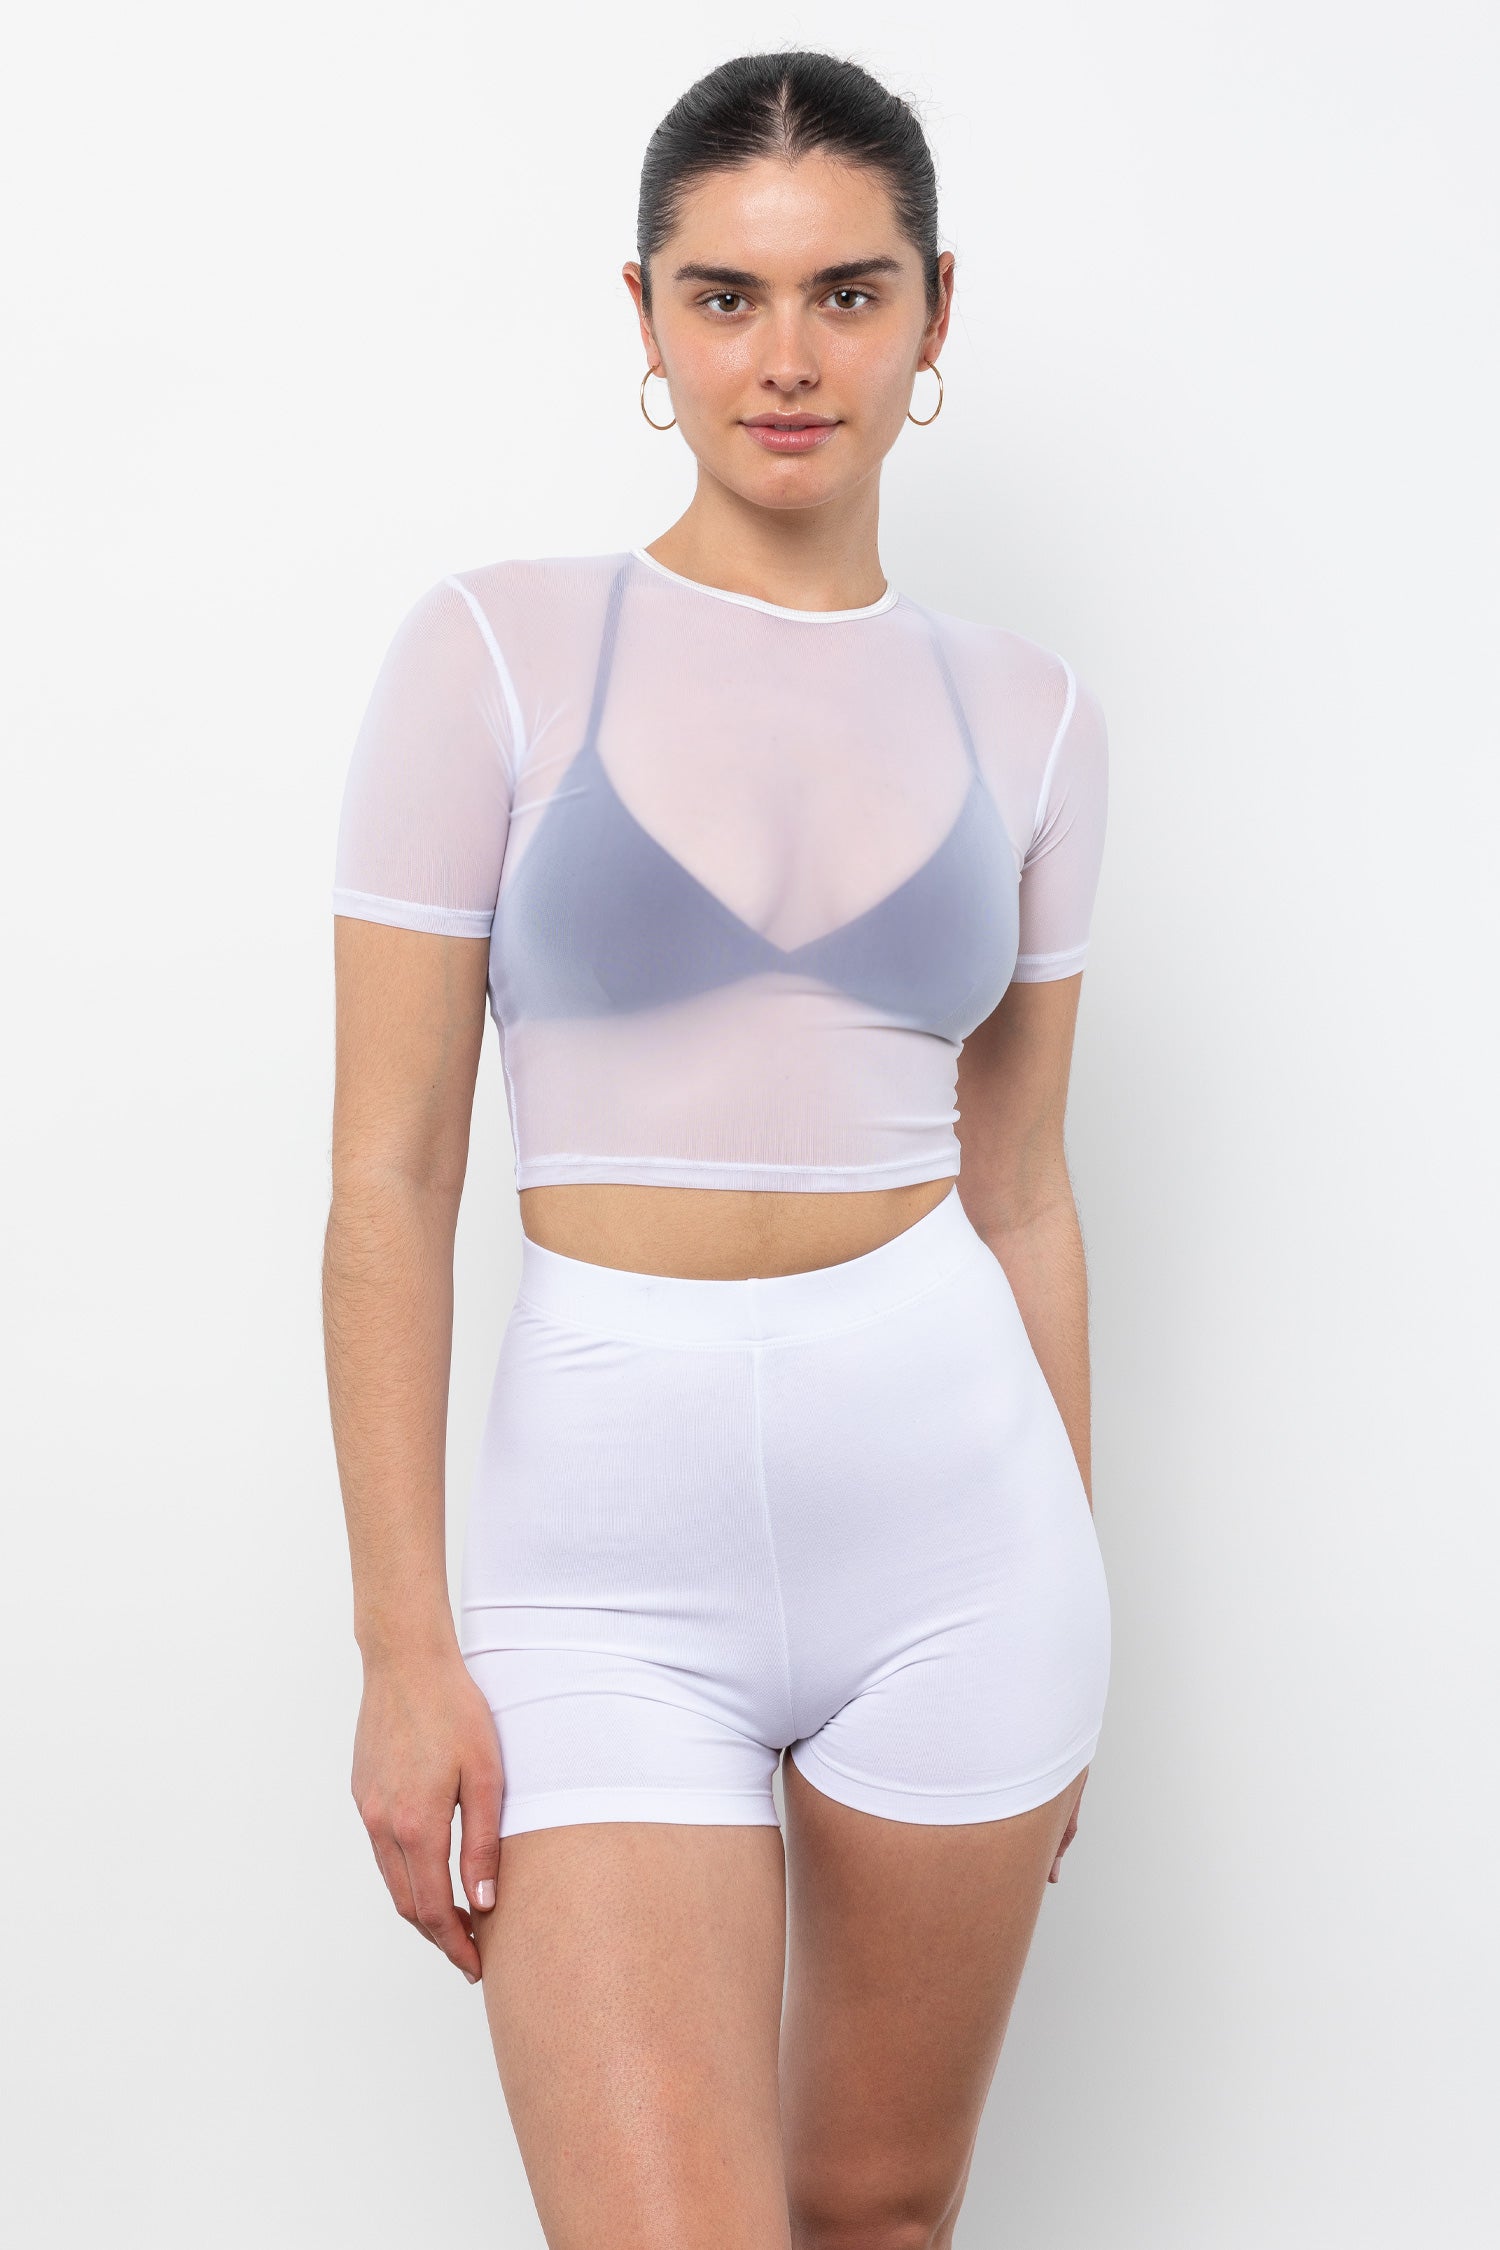 American Apparel Women's Nylon Spandex Micro-Mesh Triangle Cross-Back Bra  Size M Nude at  Women's Clothing store: Bras